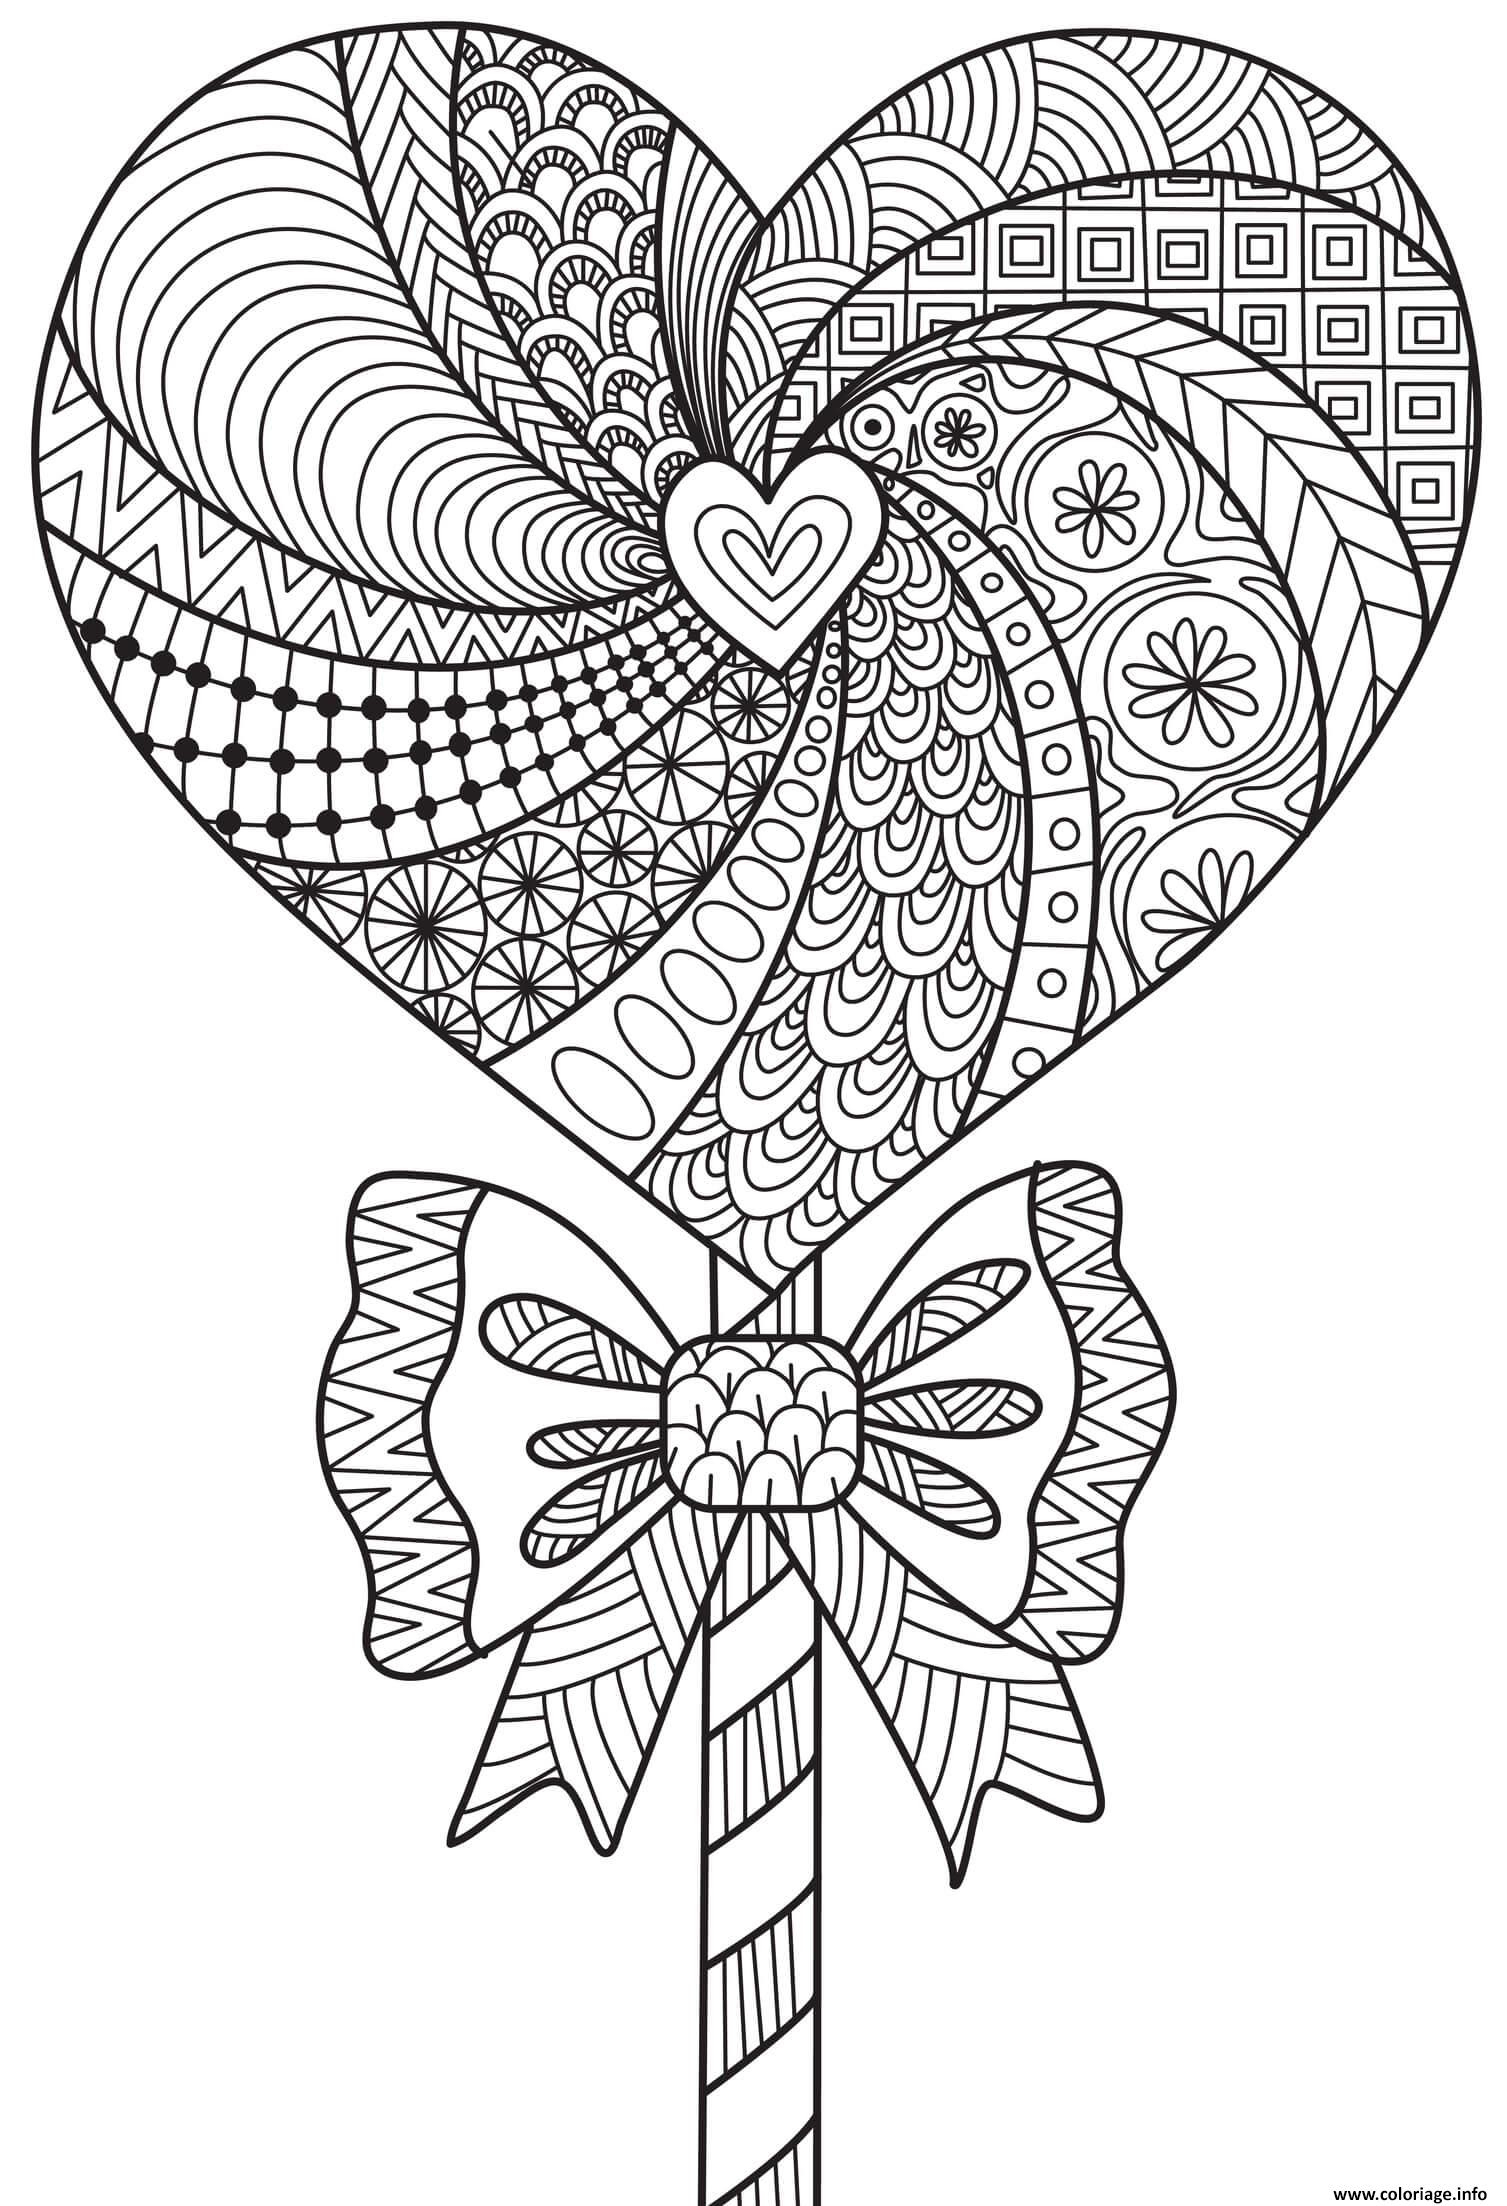 Coloriage Coeur Mandala Ã Imprimer - Mainan Oliv concernant Coloriage Coeur À Imprimer